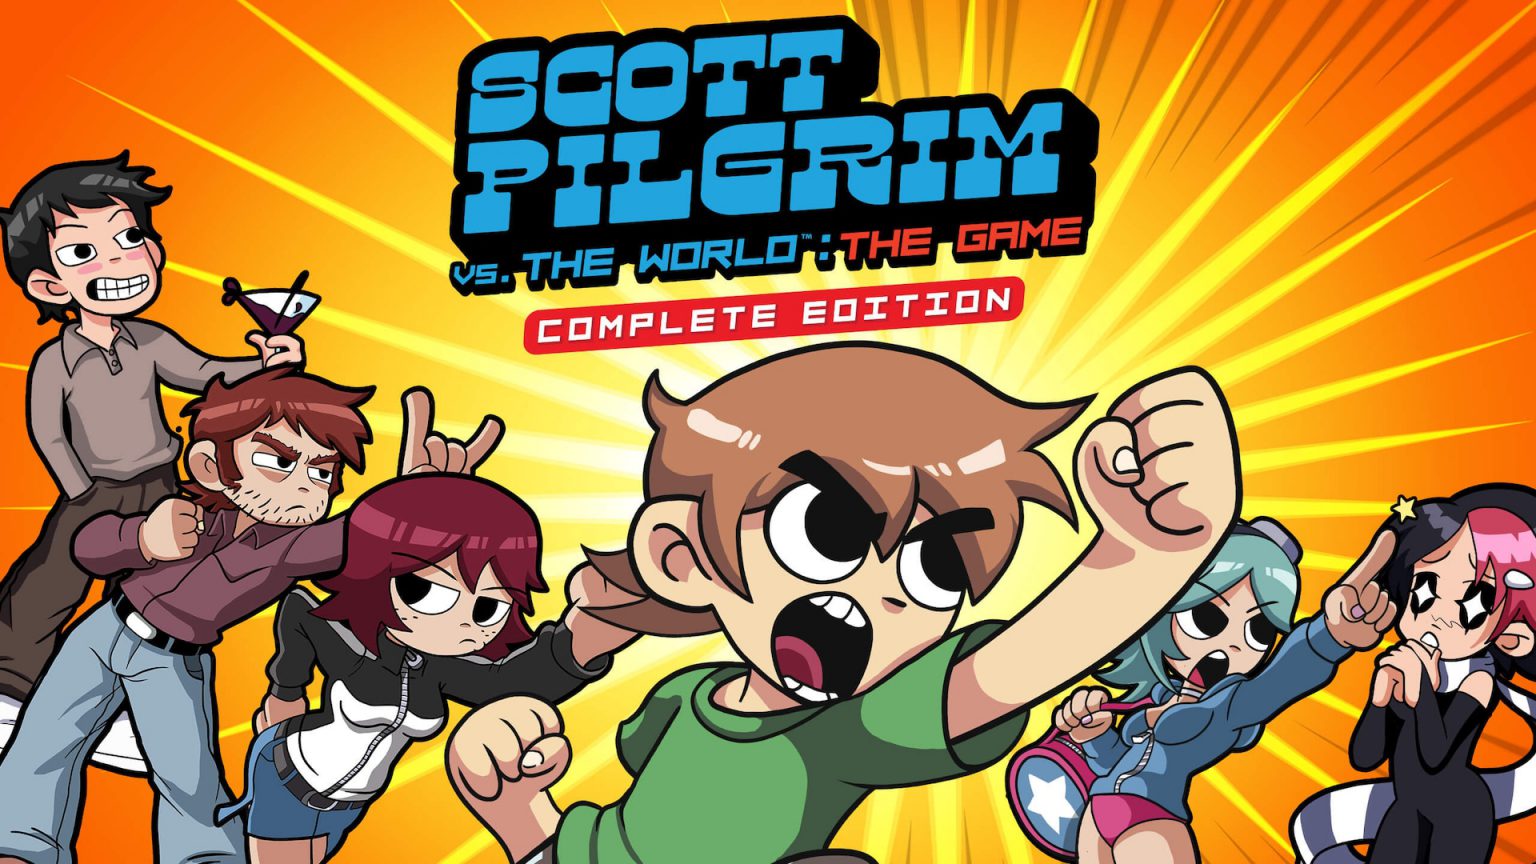 scott pilgrim vs the world the game gamestop download code